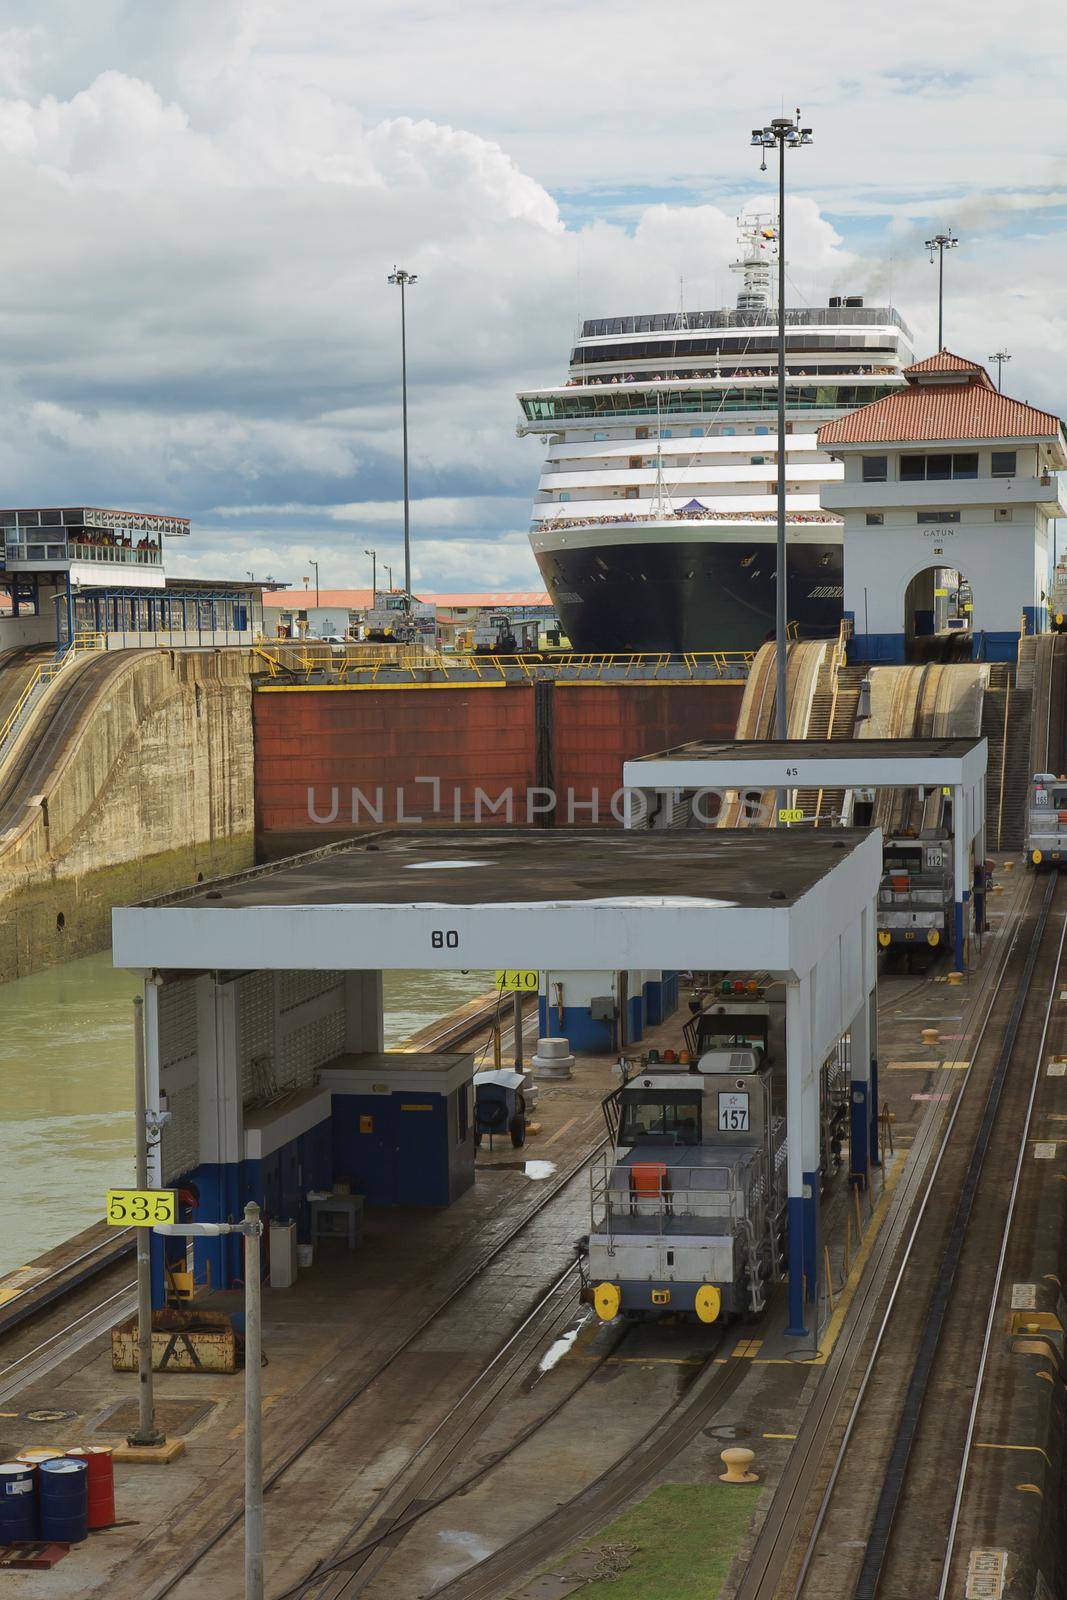 Cruise ship going through locks in Panama Canal by wondry